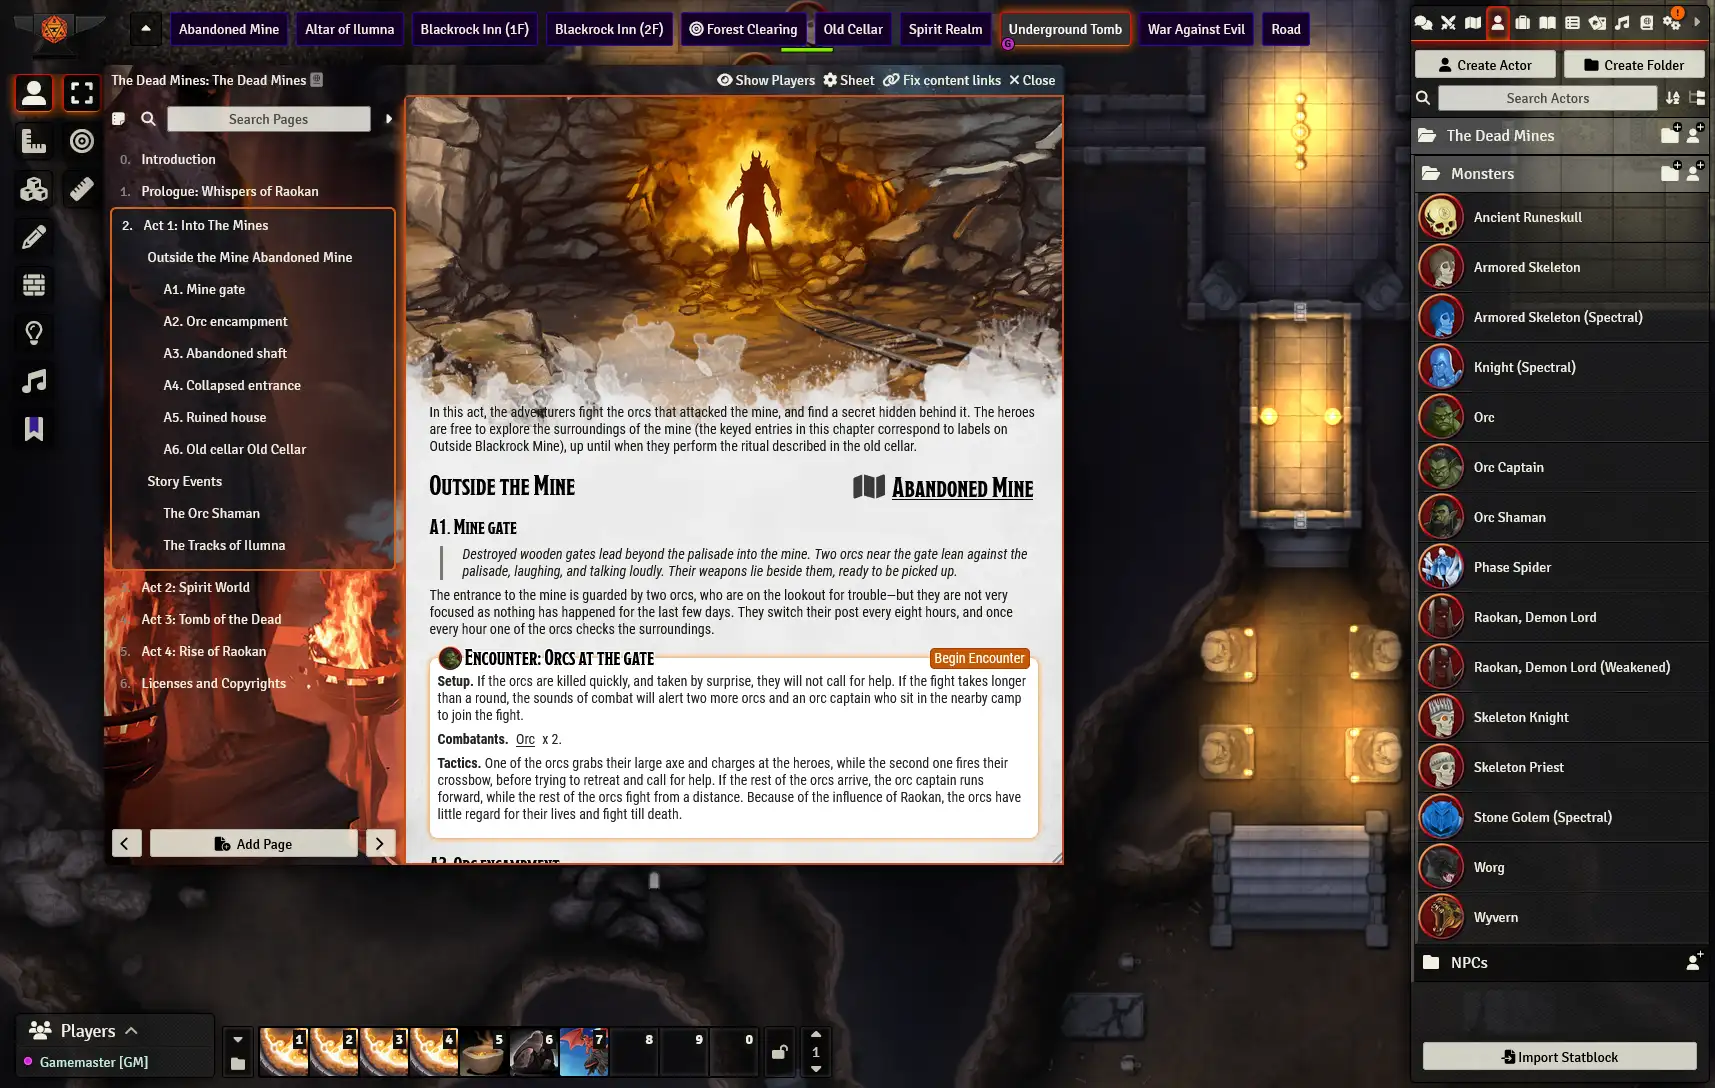 A screenshot depicting a dungeon scene